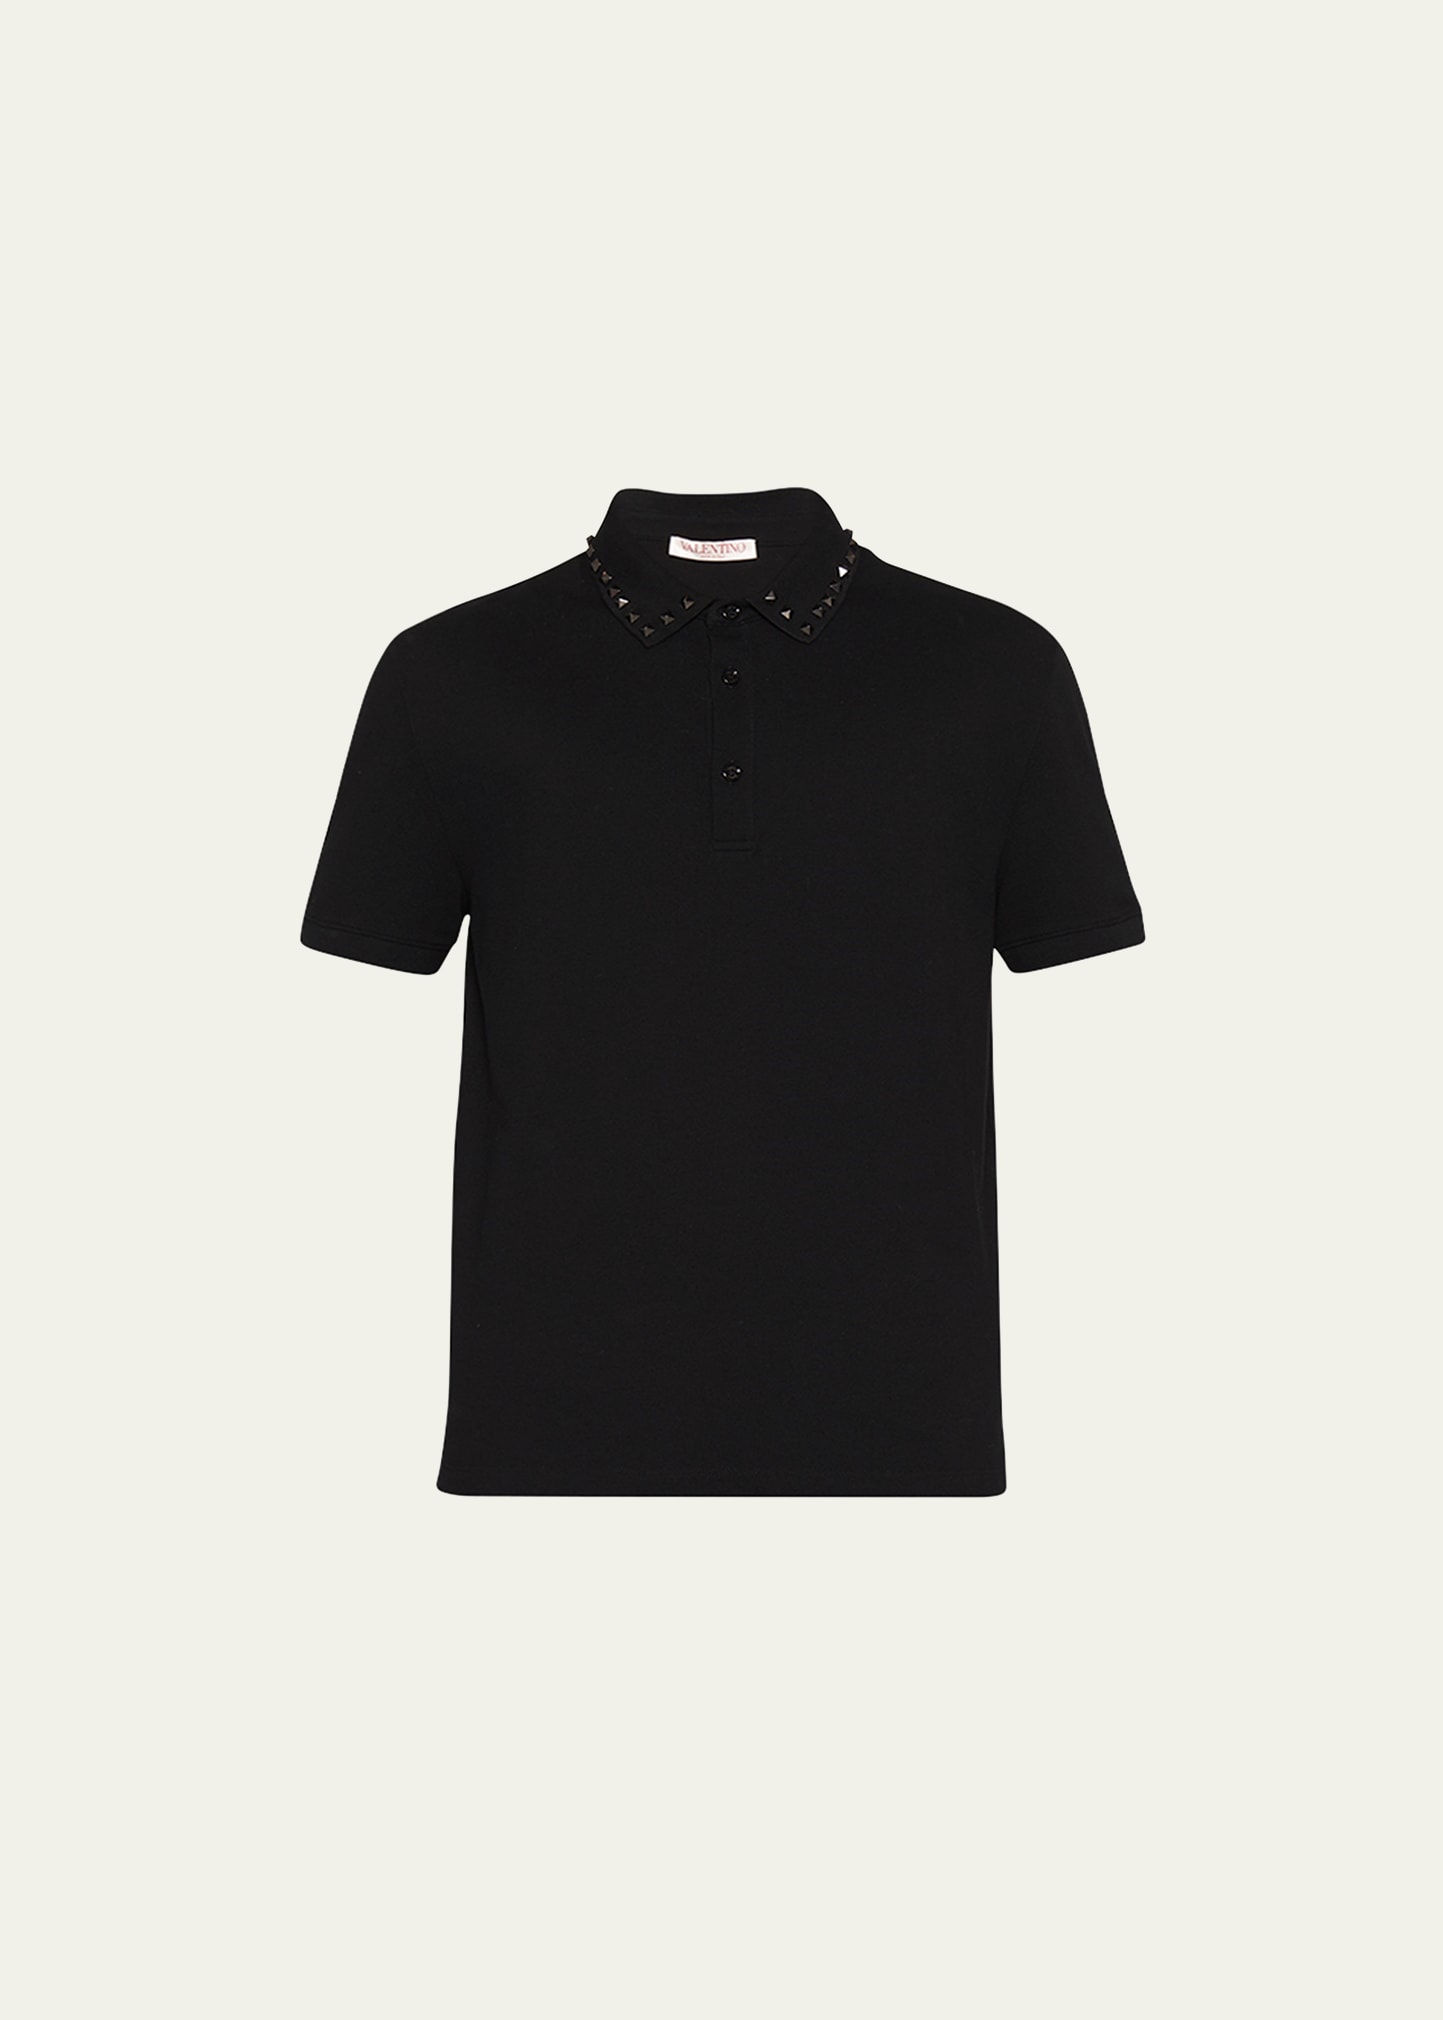 Valentino Men's Tonal Rockstud Jersey Polo Shirt In Black